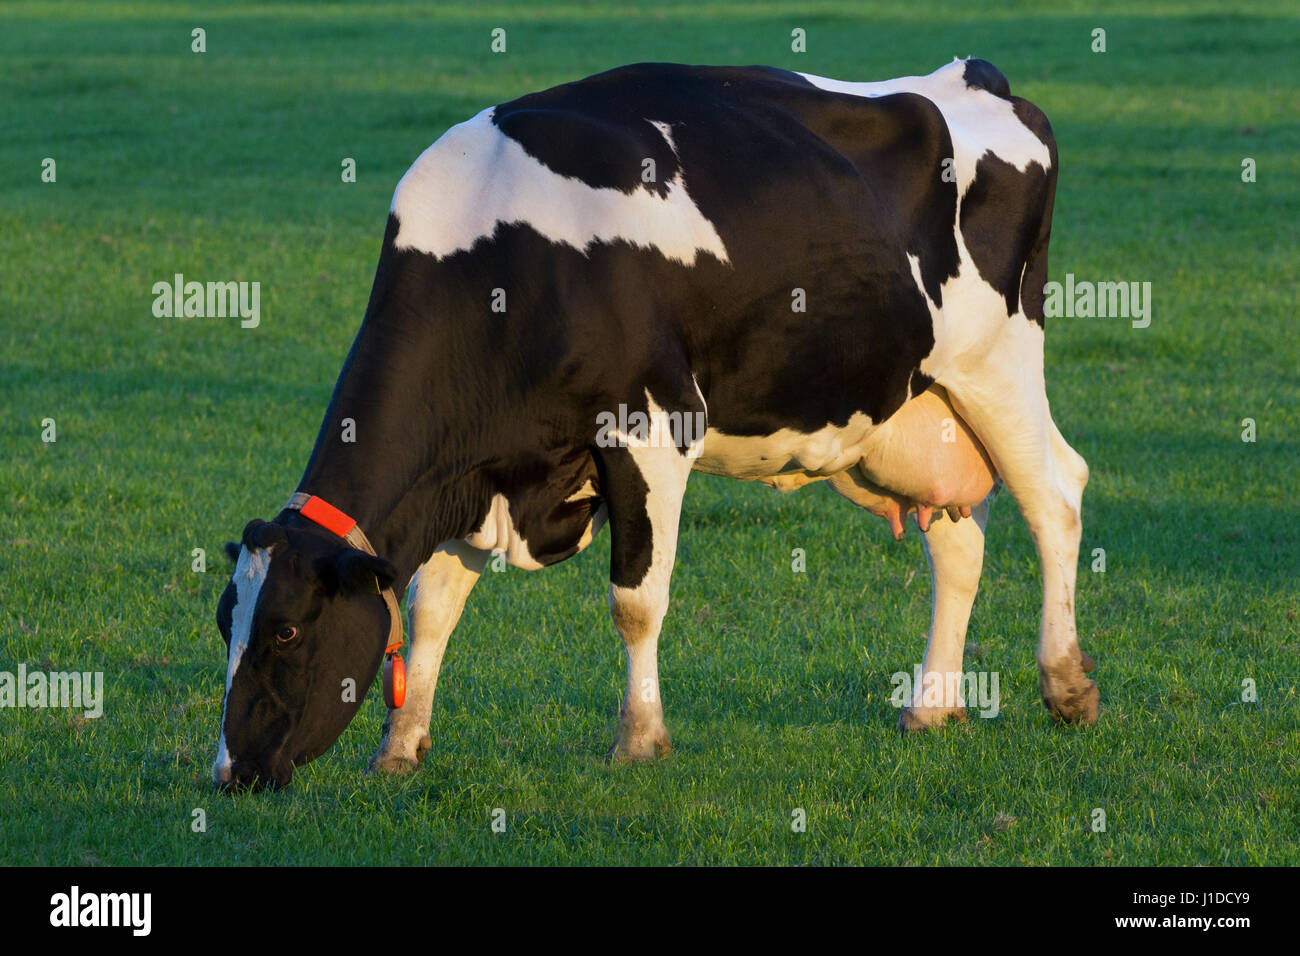 Black and white Holstein Friesian cow grazing Stock Photo